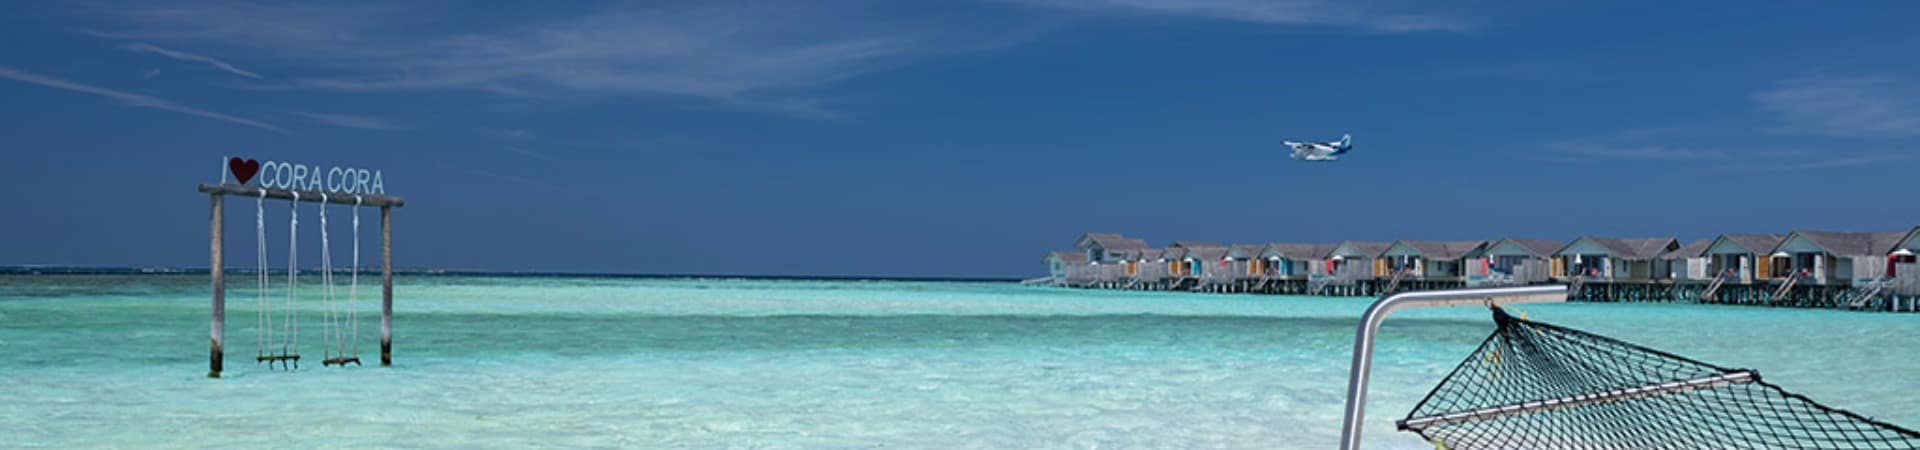 Cora cora maldives paisagem hotel